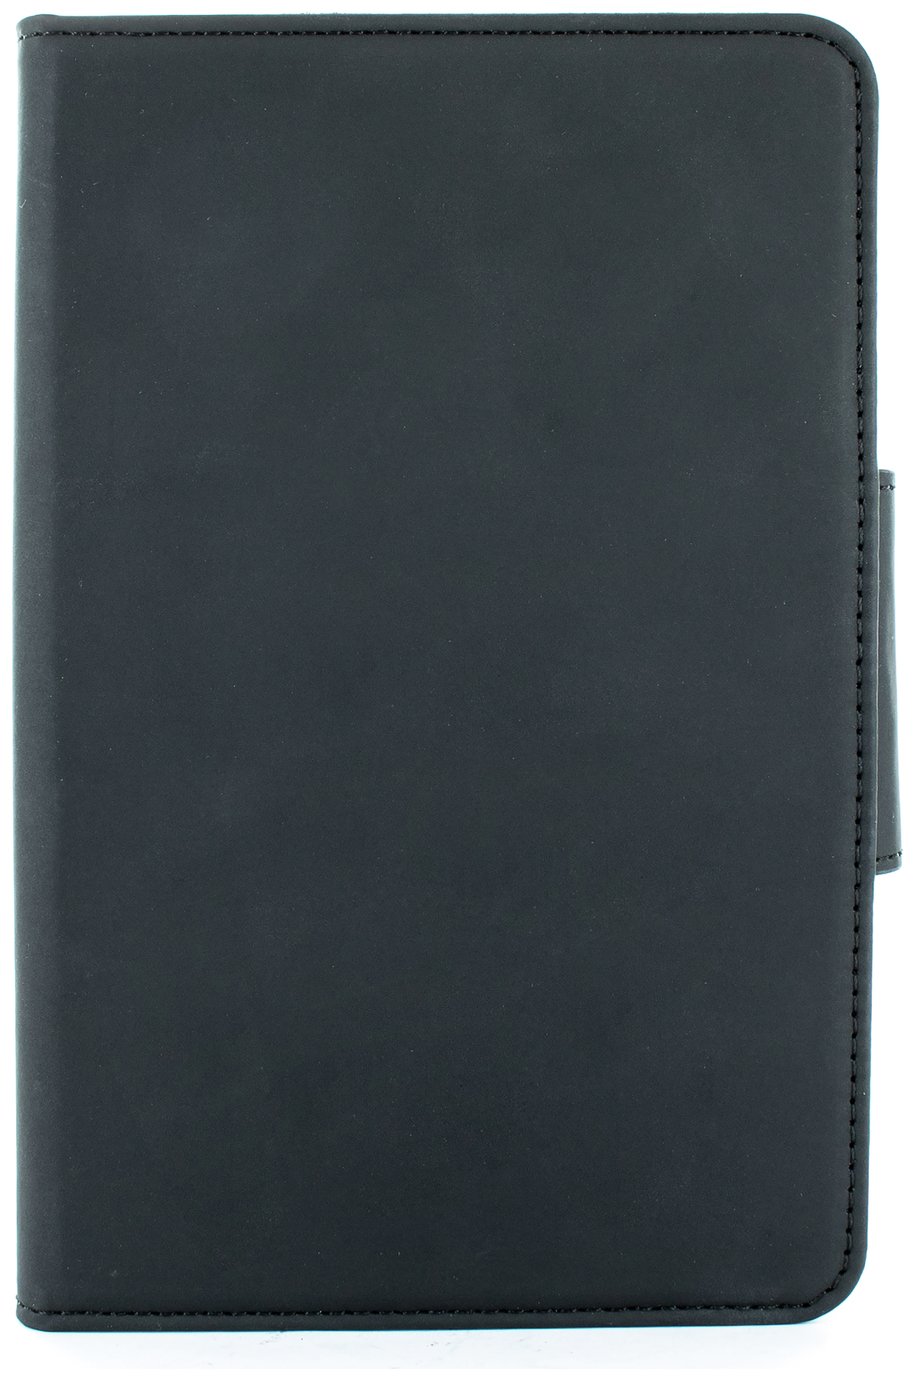 Proporta Samsung S4 10.5 Inch Tablet Cover - Black